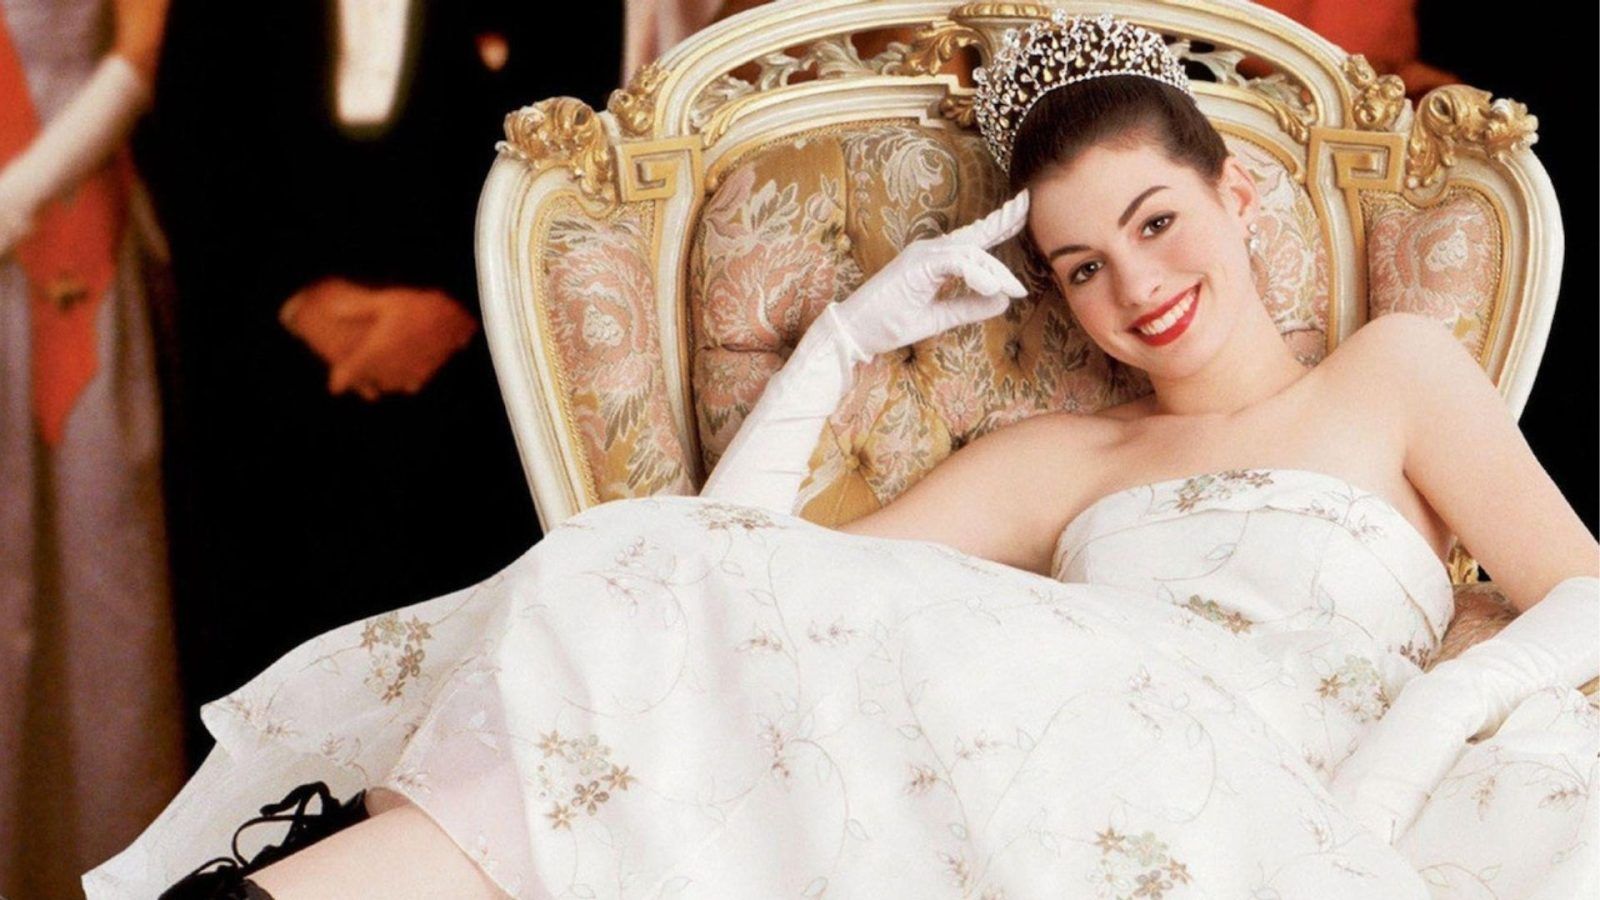 Princess Diaries 3 is happening again - Will Anne Hathaway return?